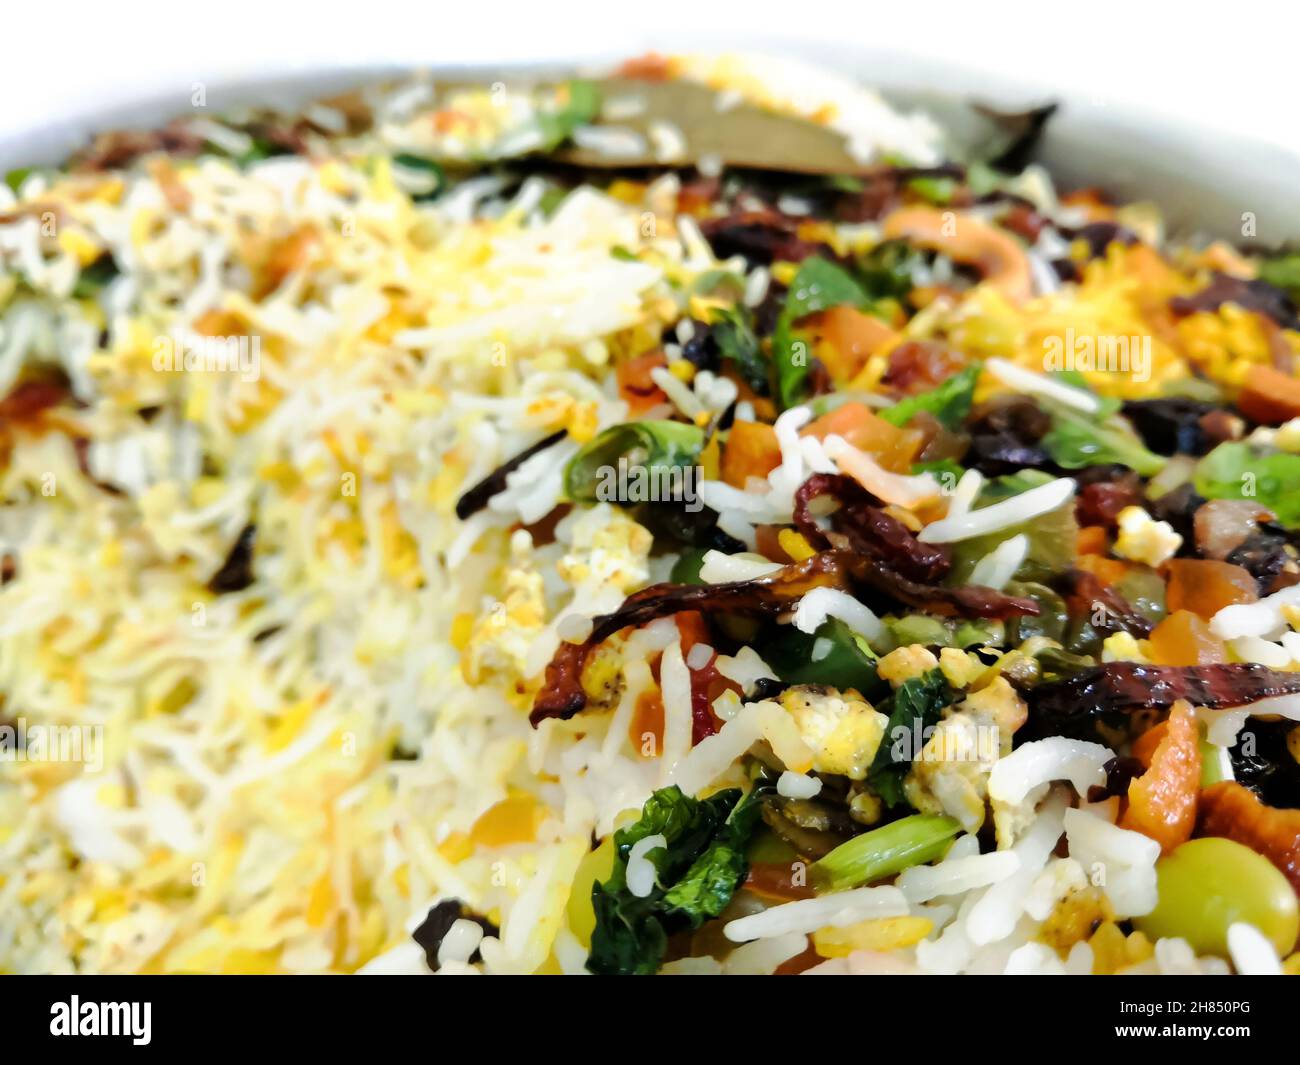 Closeup Image Of Kerala Style Tasty Vegetable Biryani Made With Basmati Rice. Selective Focus Stock Photo